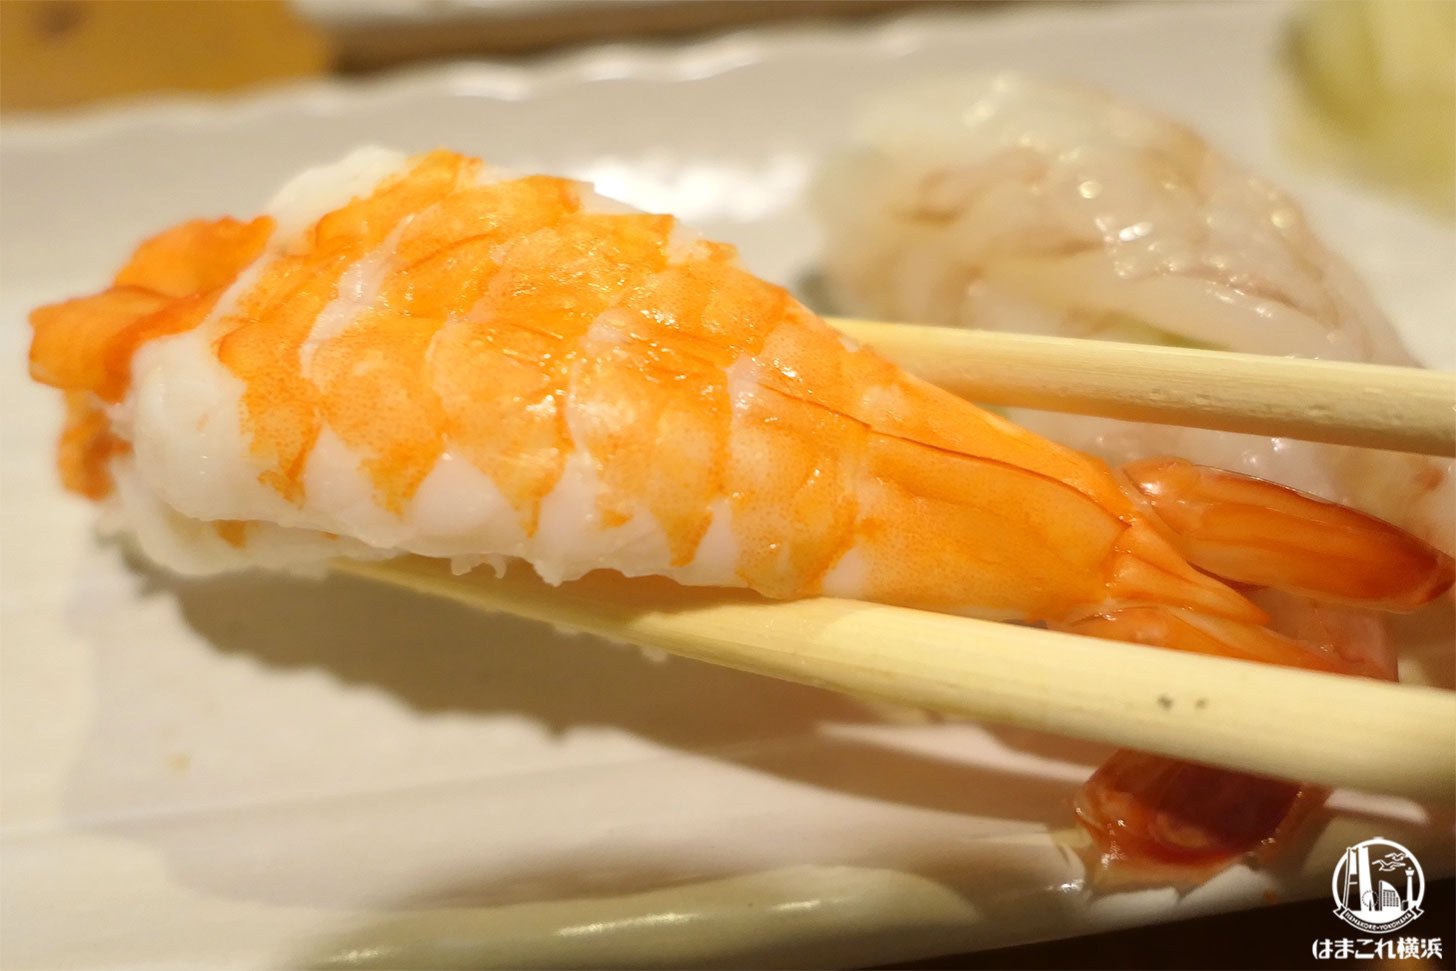 特上の握り寿司 海老寿司